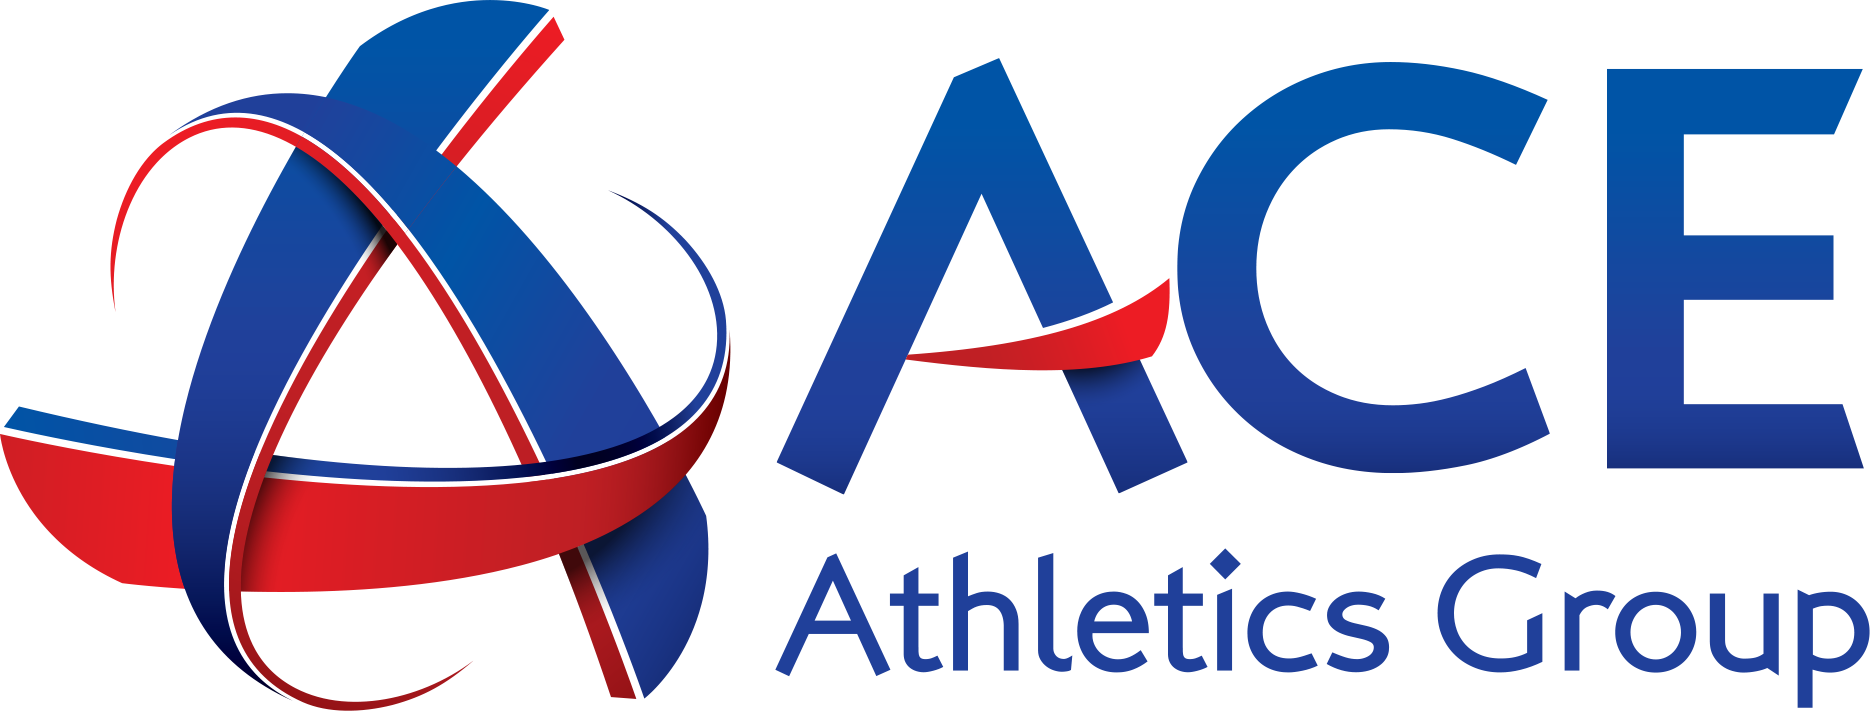 Ace Athletics Group Diamond Duels Logo